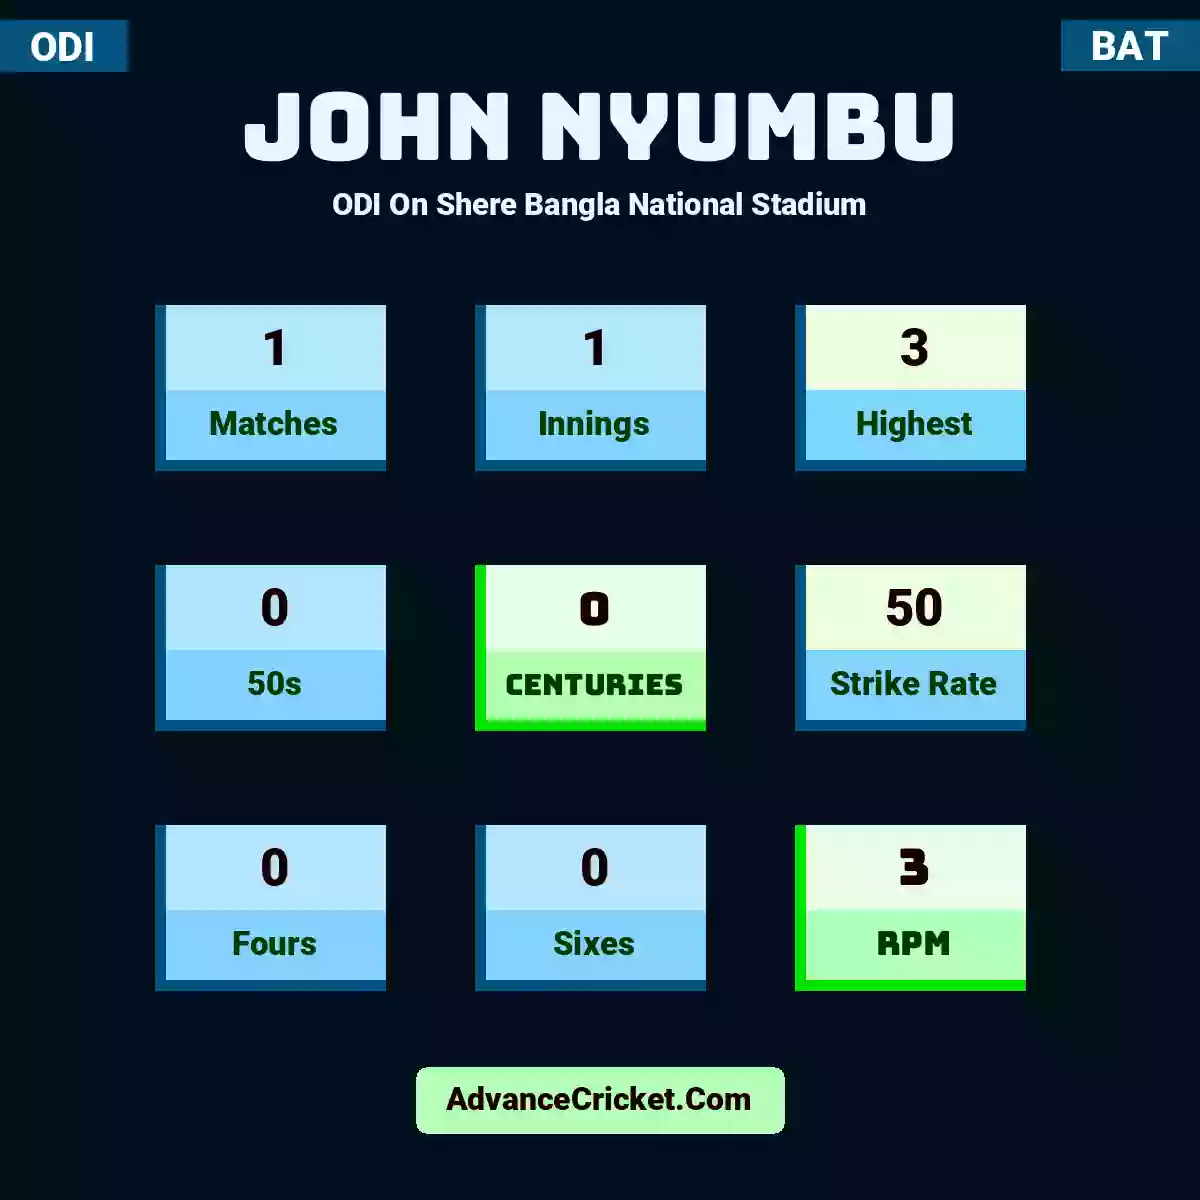 John Nyumbu ODI  On Shere Bangla National Stadium, John Nyumbu played 1 matches, scored 3 runs as highest, 0 half-centuries, and 0 centuries, with a strike rate of 50. J.Nyumbu hit 0 fours and 0 sixes, with an RPM of 3.